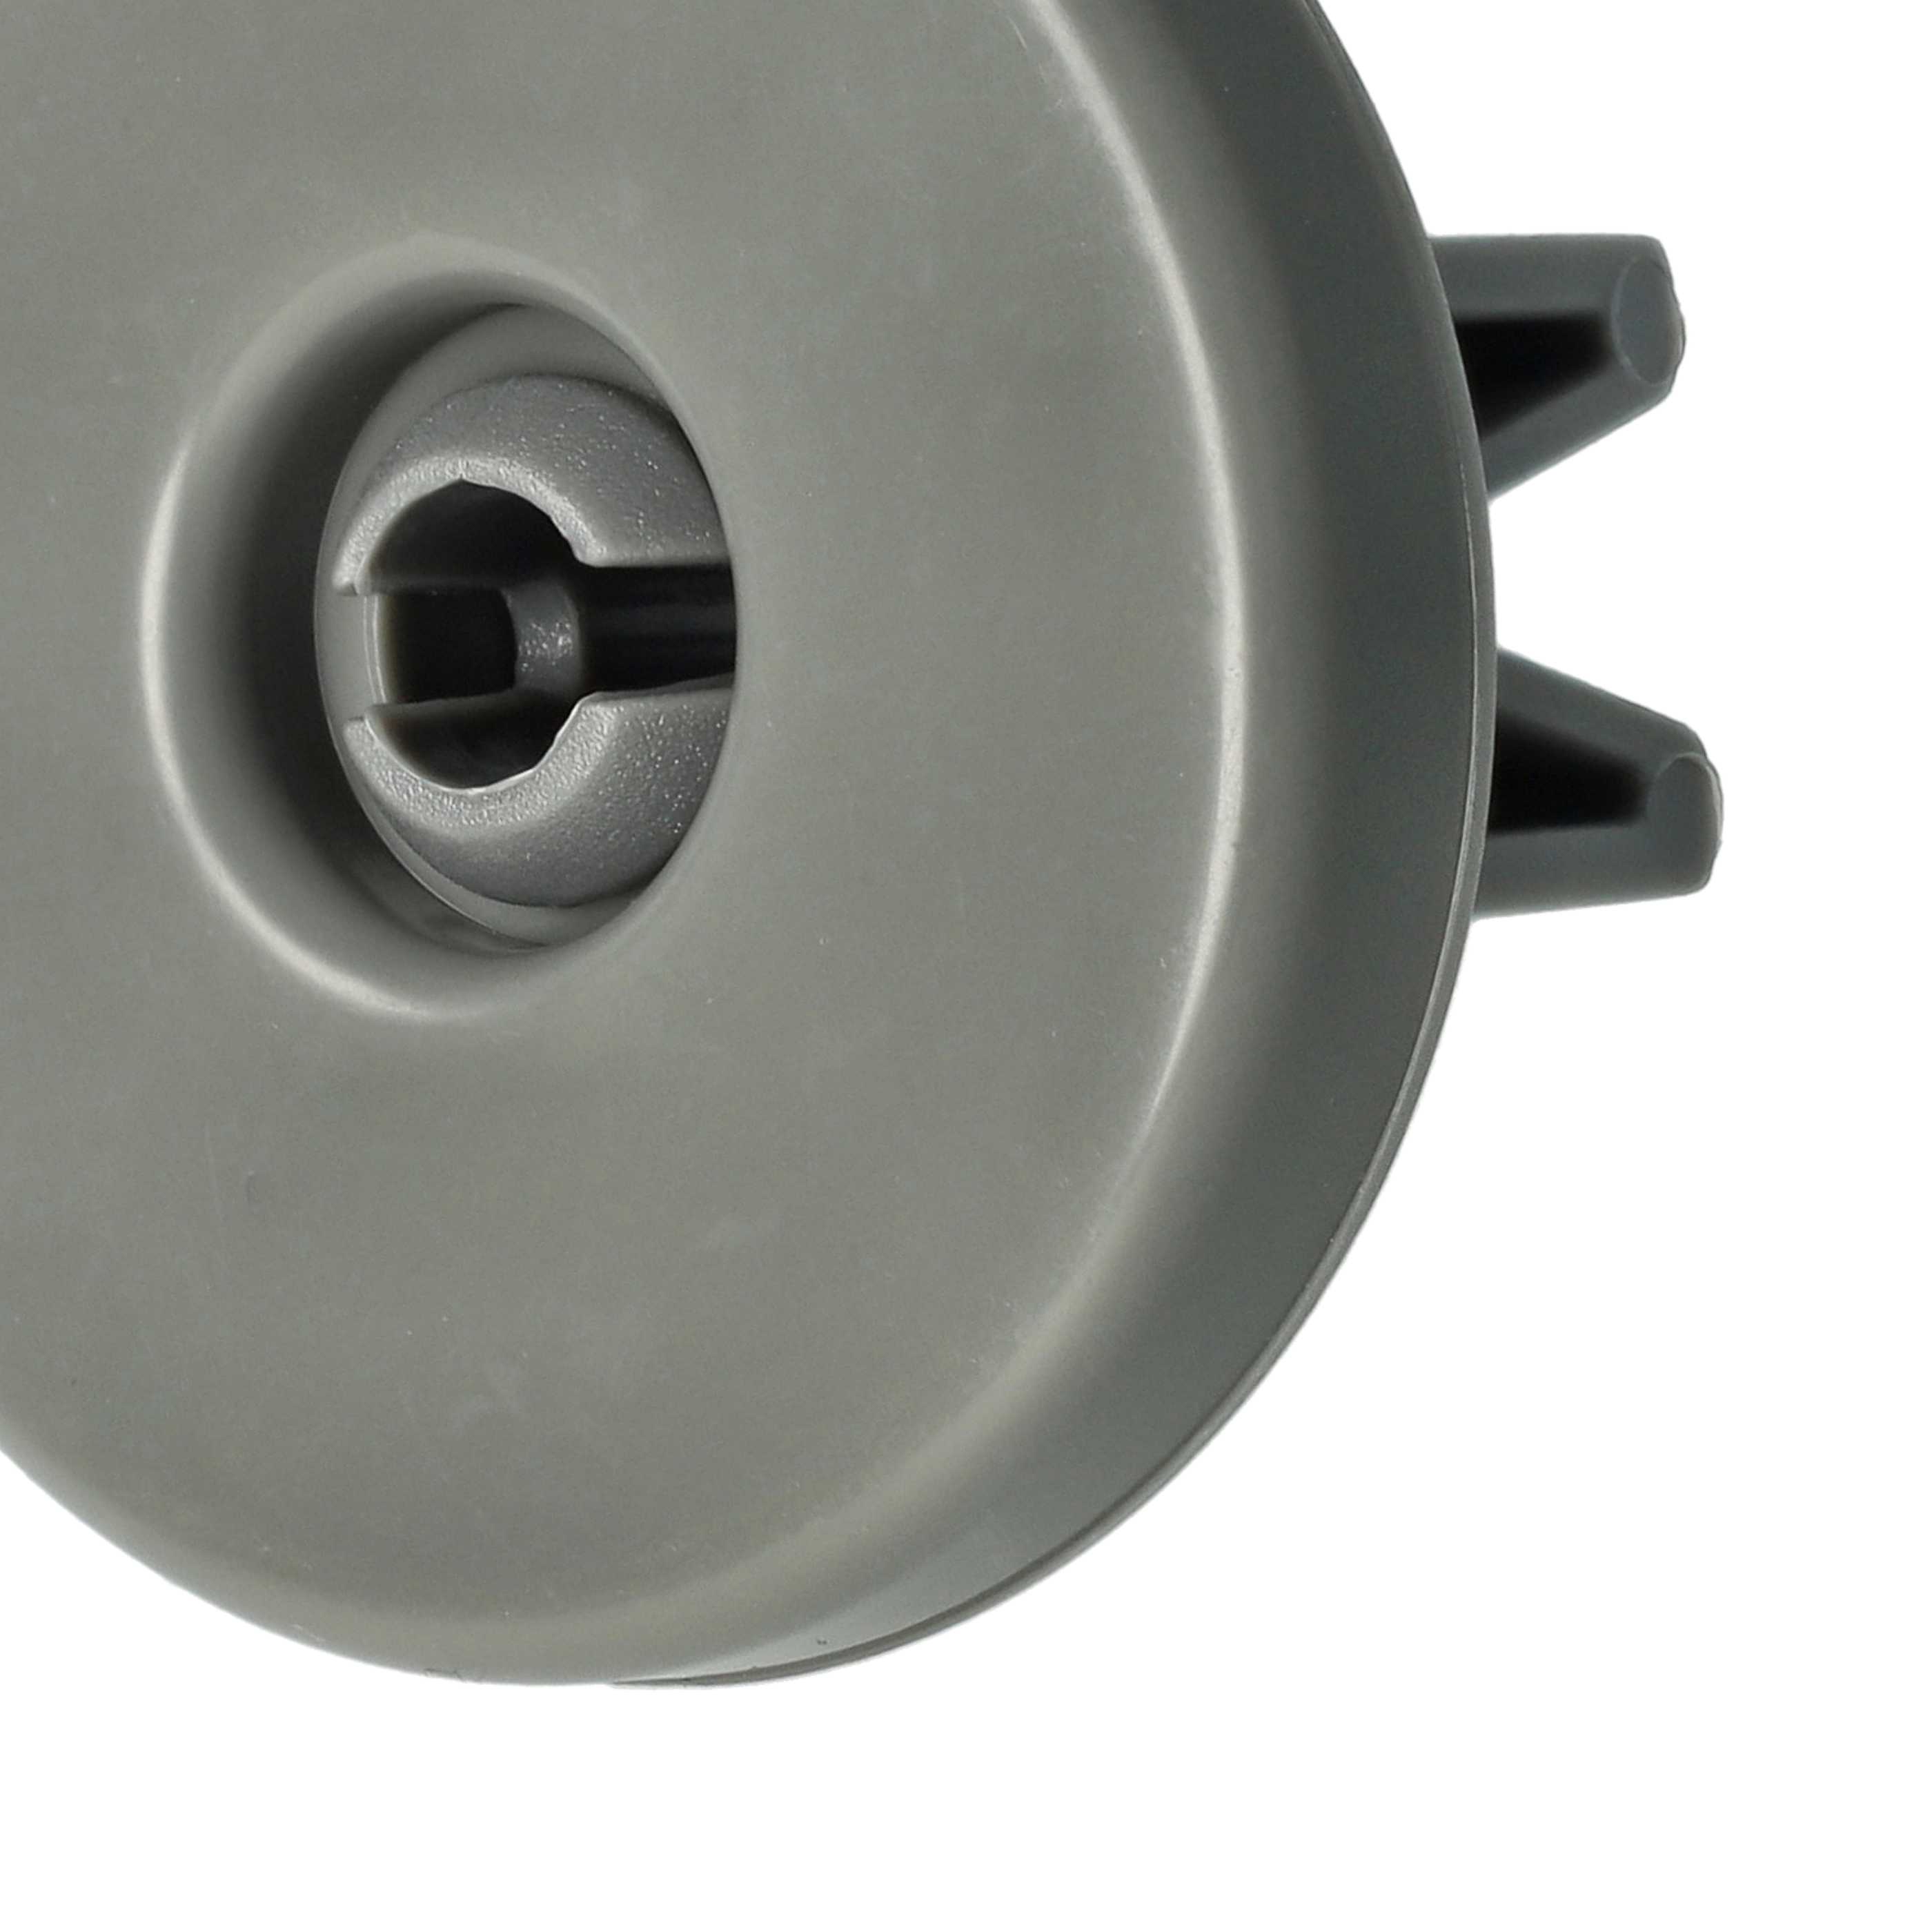 Lower Basket Wheel Diameter 40 mm suitable for DA6141 Zanussi Dishwasher